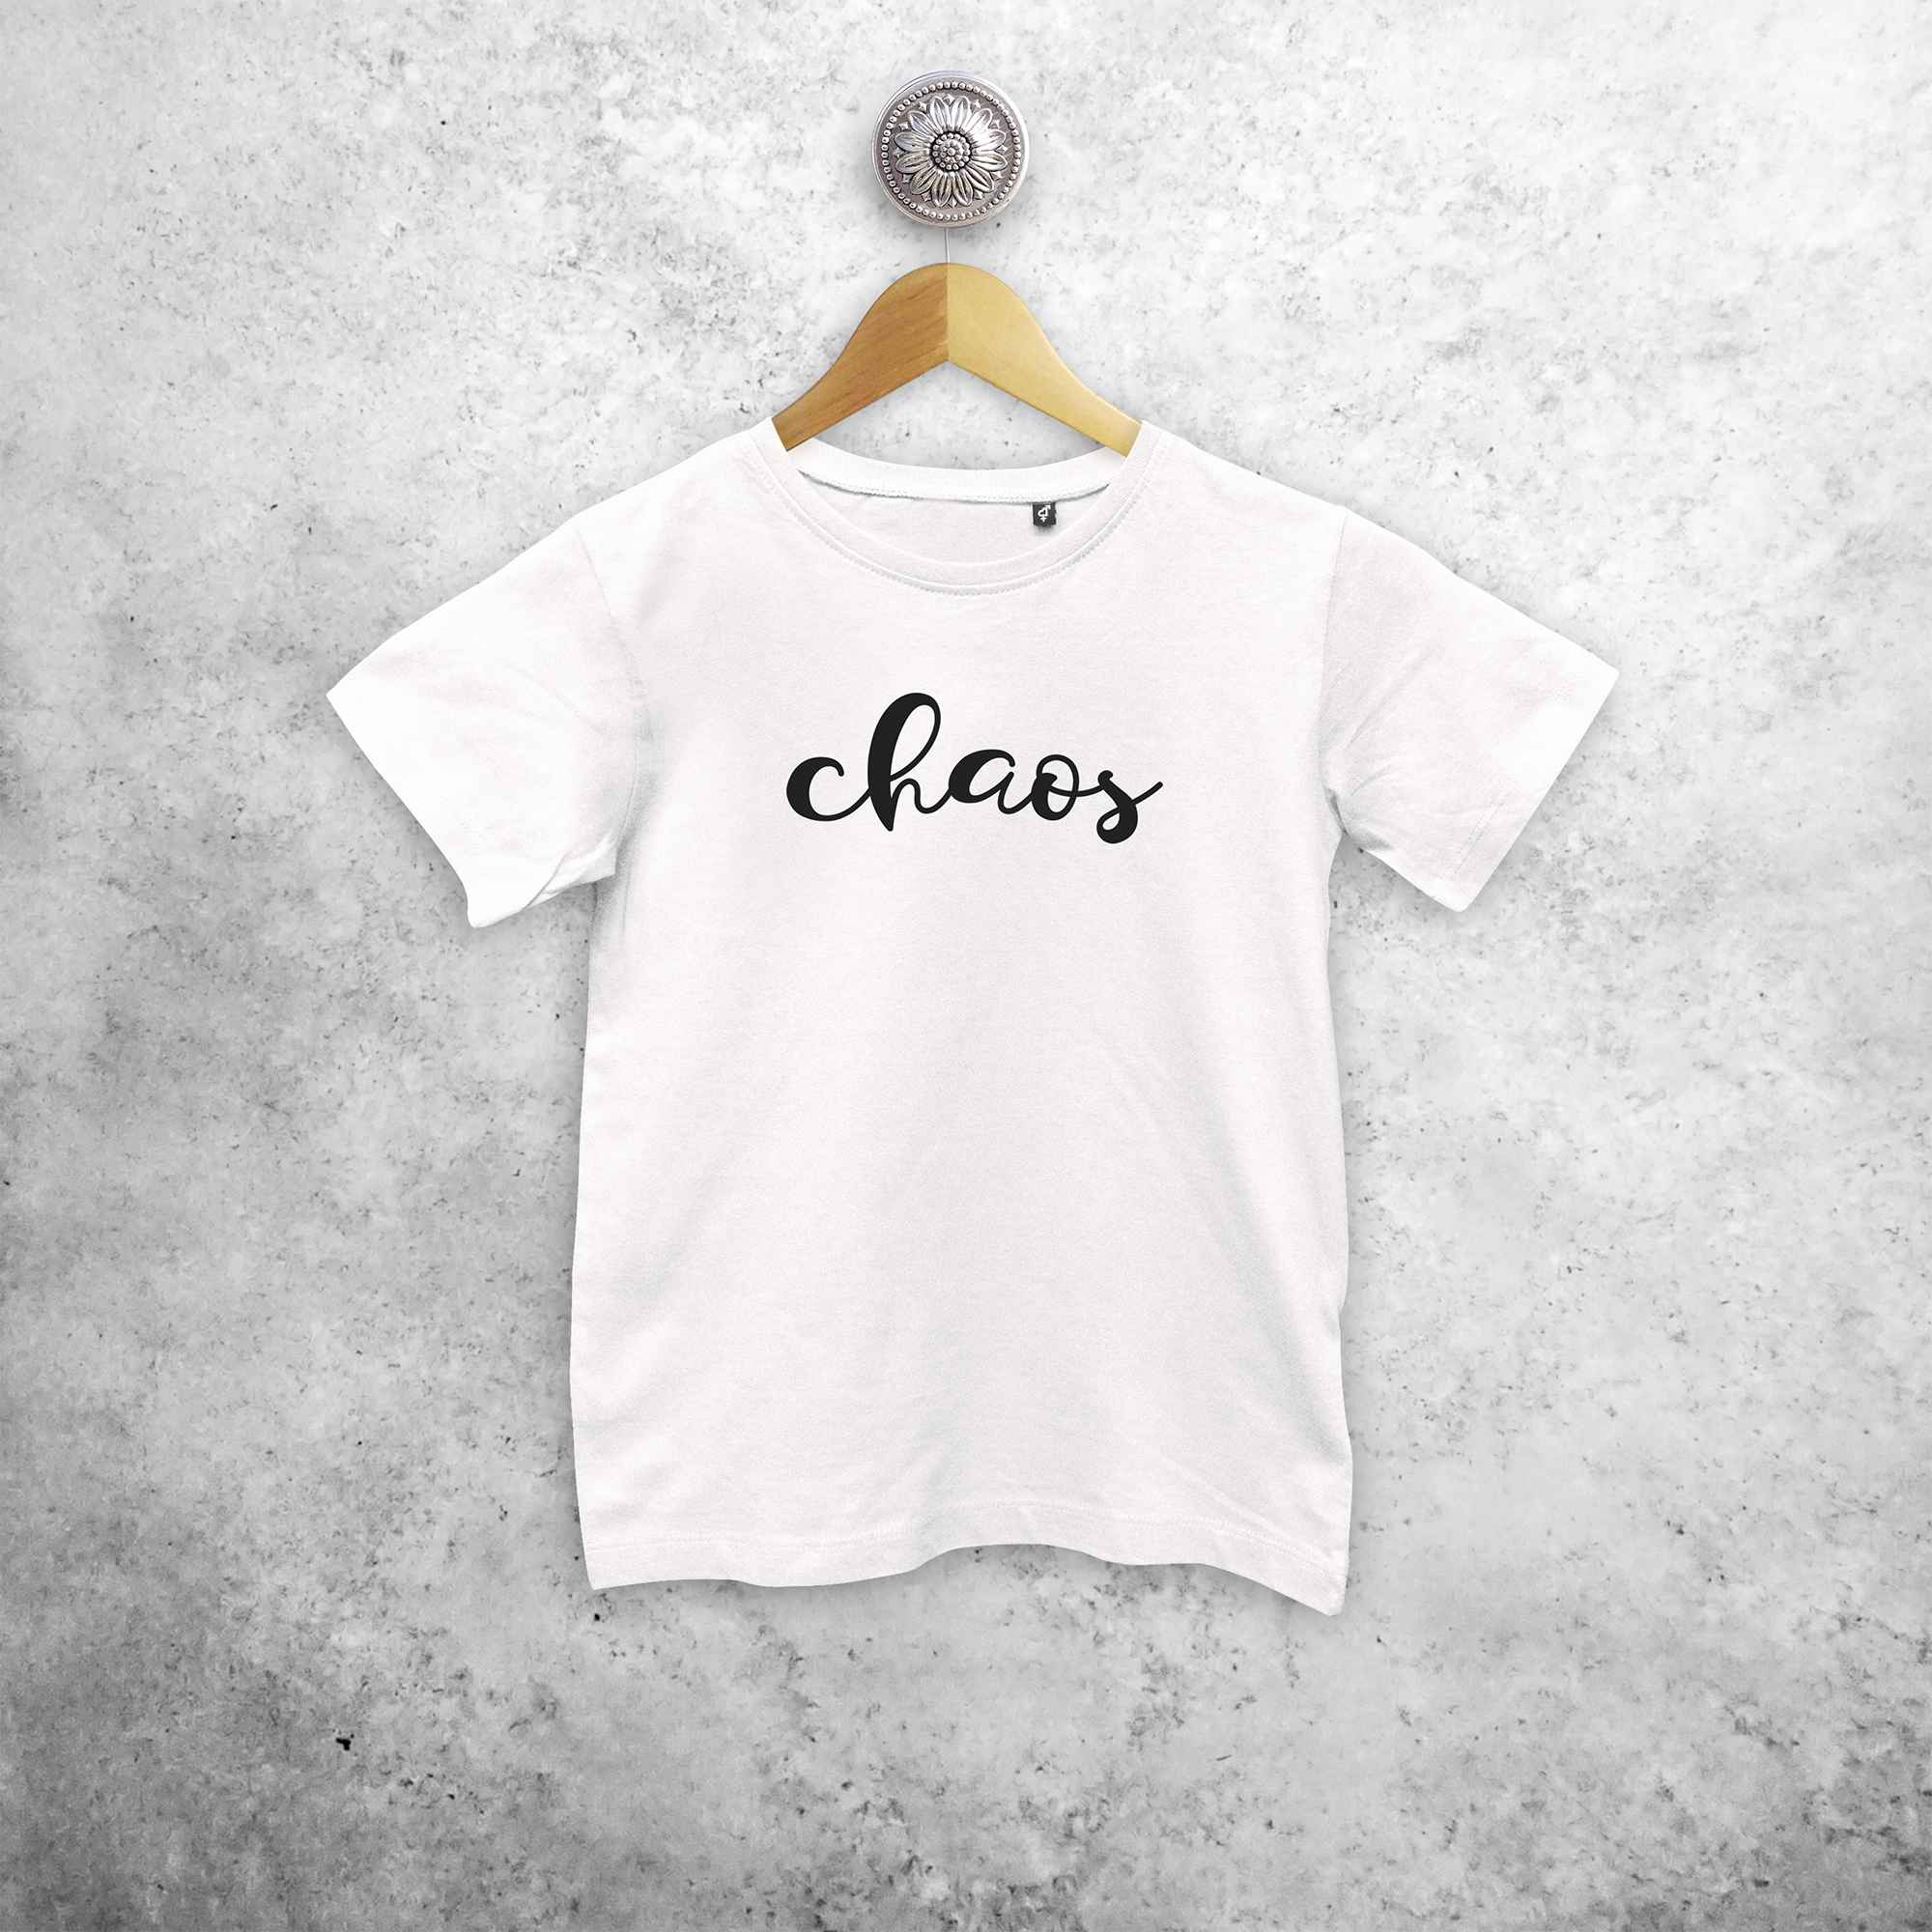 'Chaos' kids shortsleeve shirt